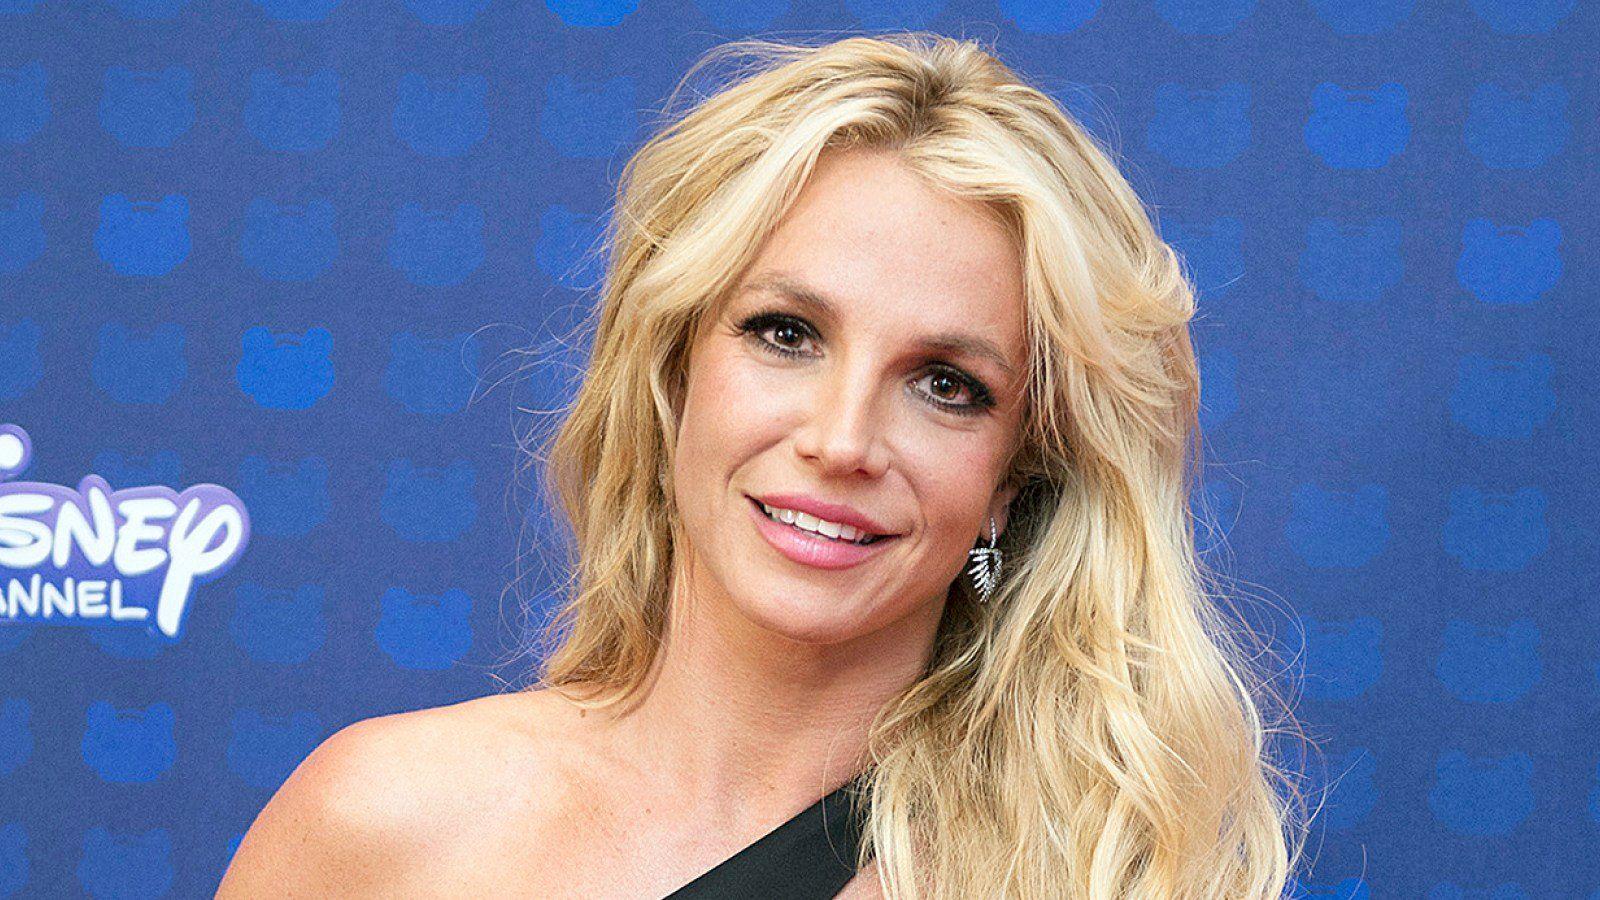 Britney Spears Engaged To Her 23 Year Old Boyfriend?